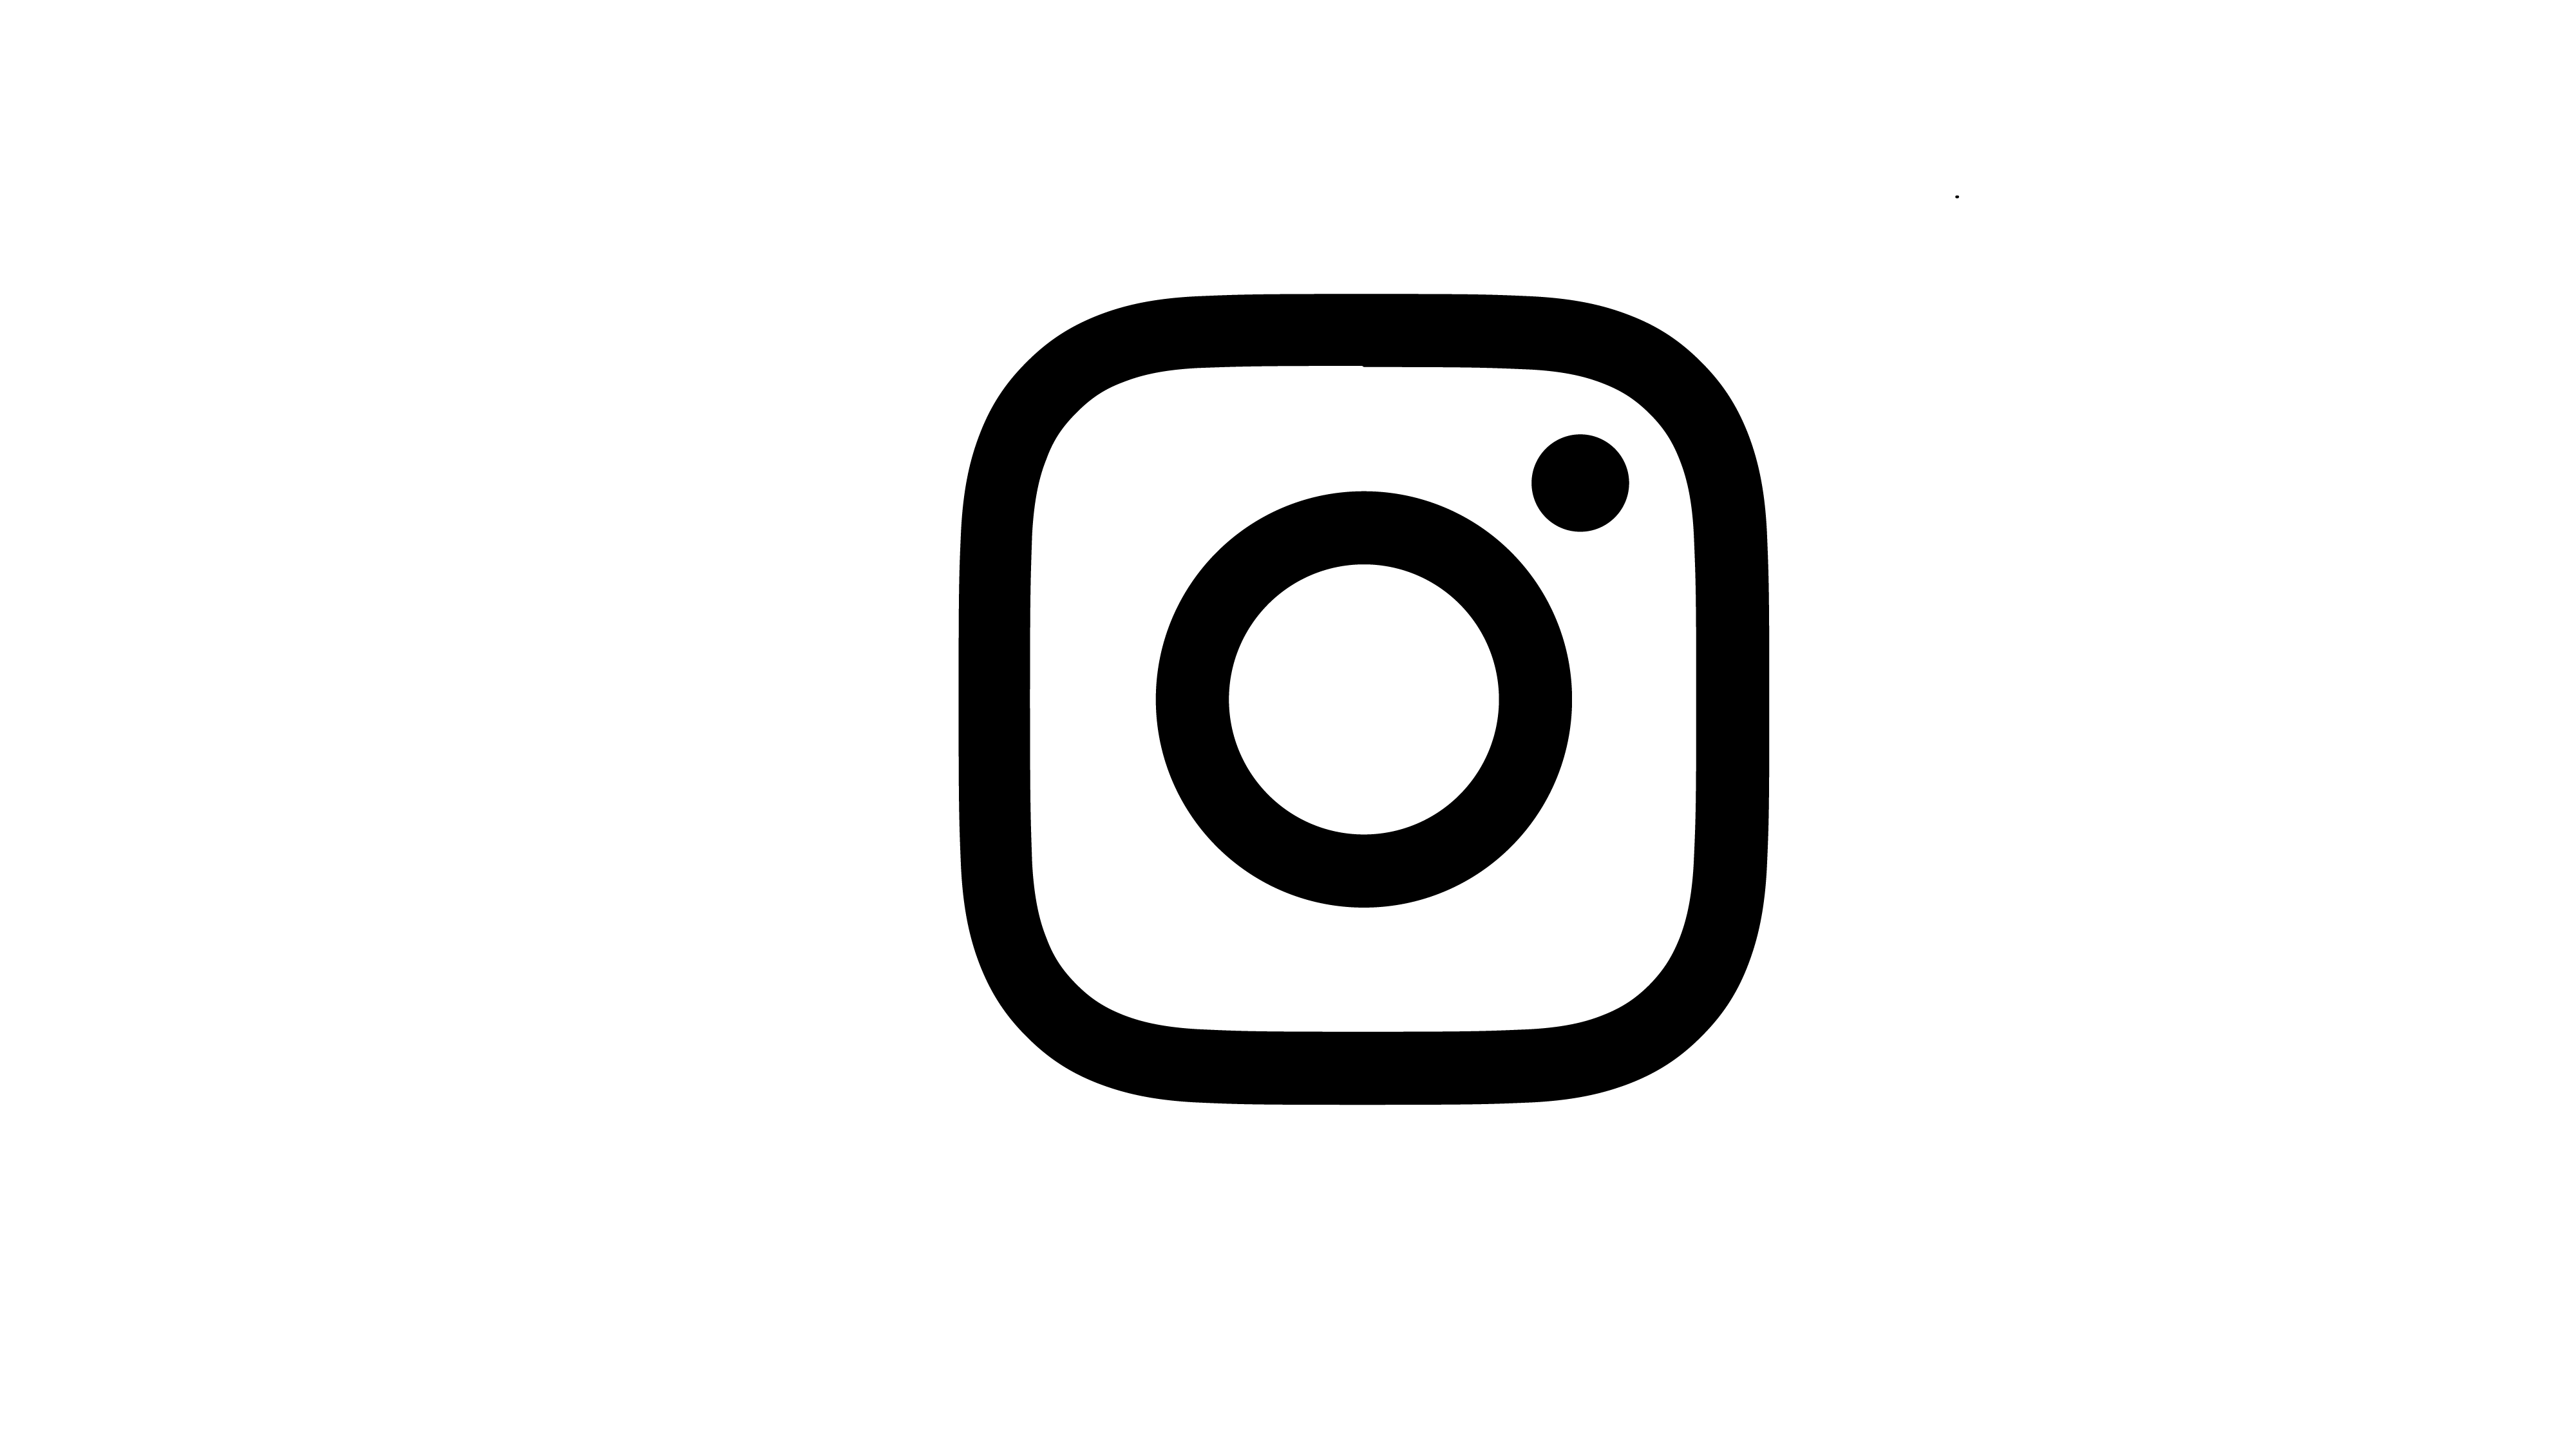 Instagram logo png. Инстаграм лого. Значок Инстаграм маленький. Иконка инстаграмма маленькая. Логотип Инстаграм на прозрачном фоне.